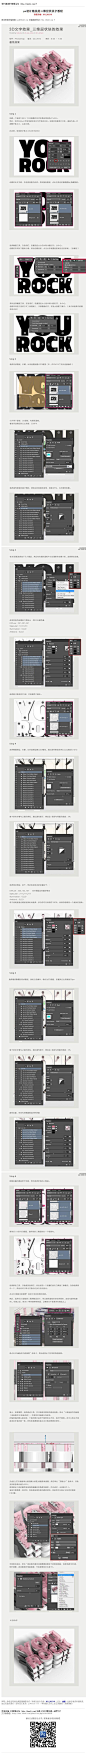 #3D立体字#《photoshop设计精美的三维层状块字教程》 PS 3D功能的又一新教程，翻译水平有限，大家自勉学习——。 教程网址：http://www.16xx8.com/photoshop/jiaocheng/2014/135155.html